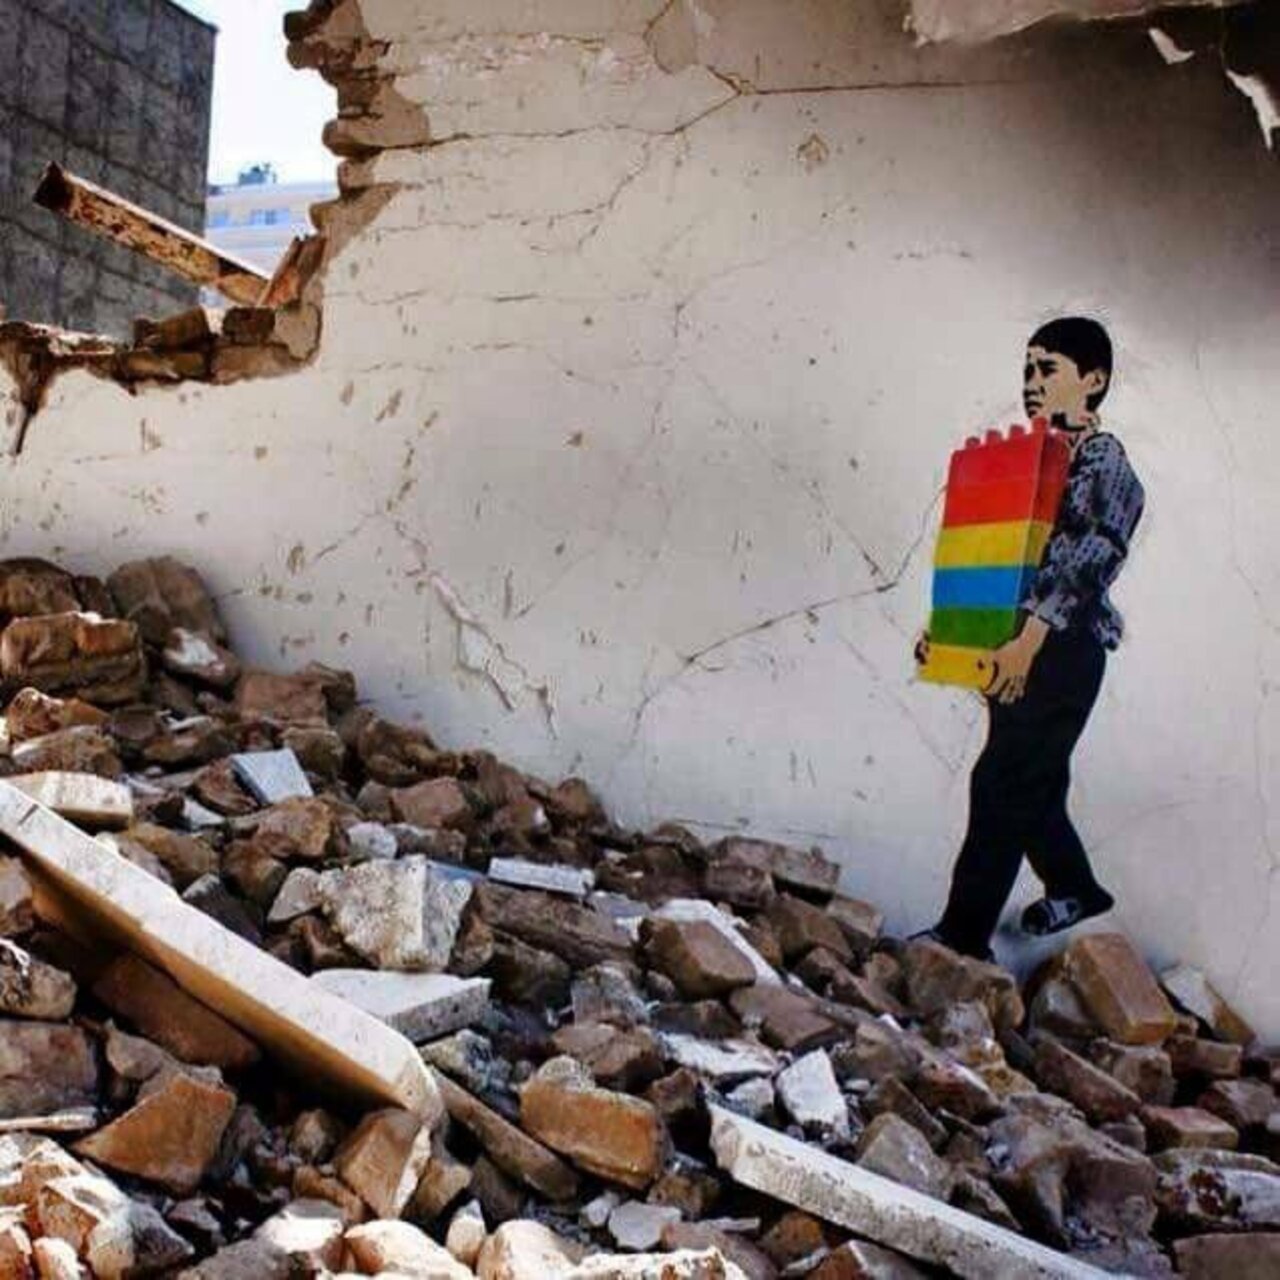 Nothing can #Destroy #Hope - #WorldHumanitarianDay#art #streetart #values #crisis http://beartistbeart.com/2016/08/19/nothing-can-destroy-hope-worldhumanitarianday https://t.co/OGdhuMgzaq